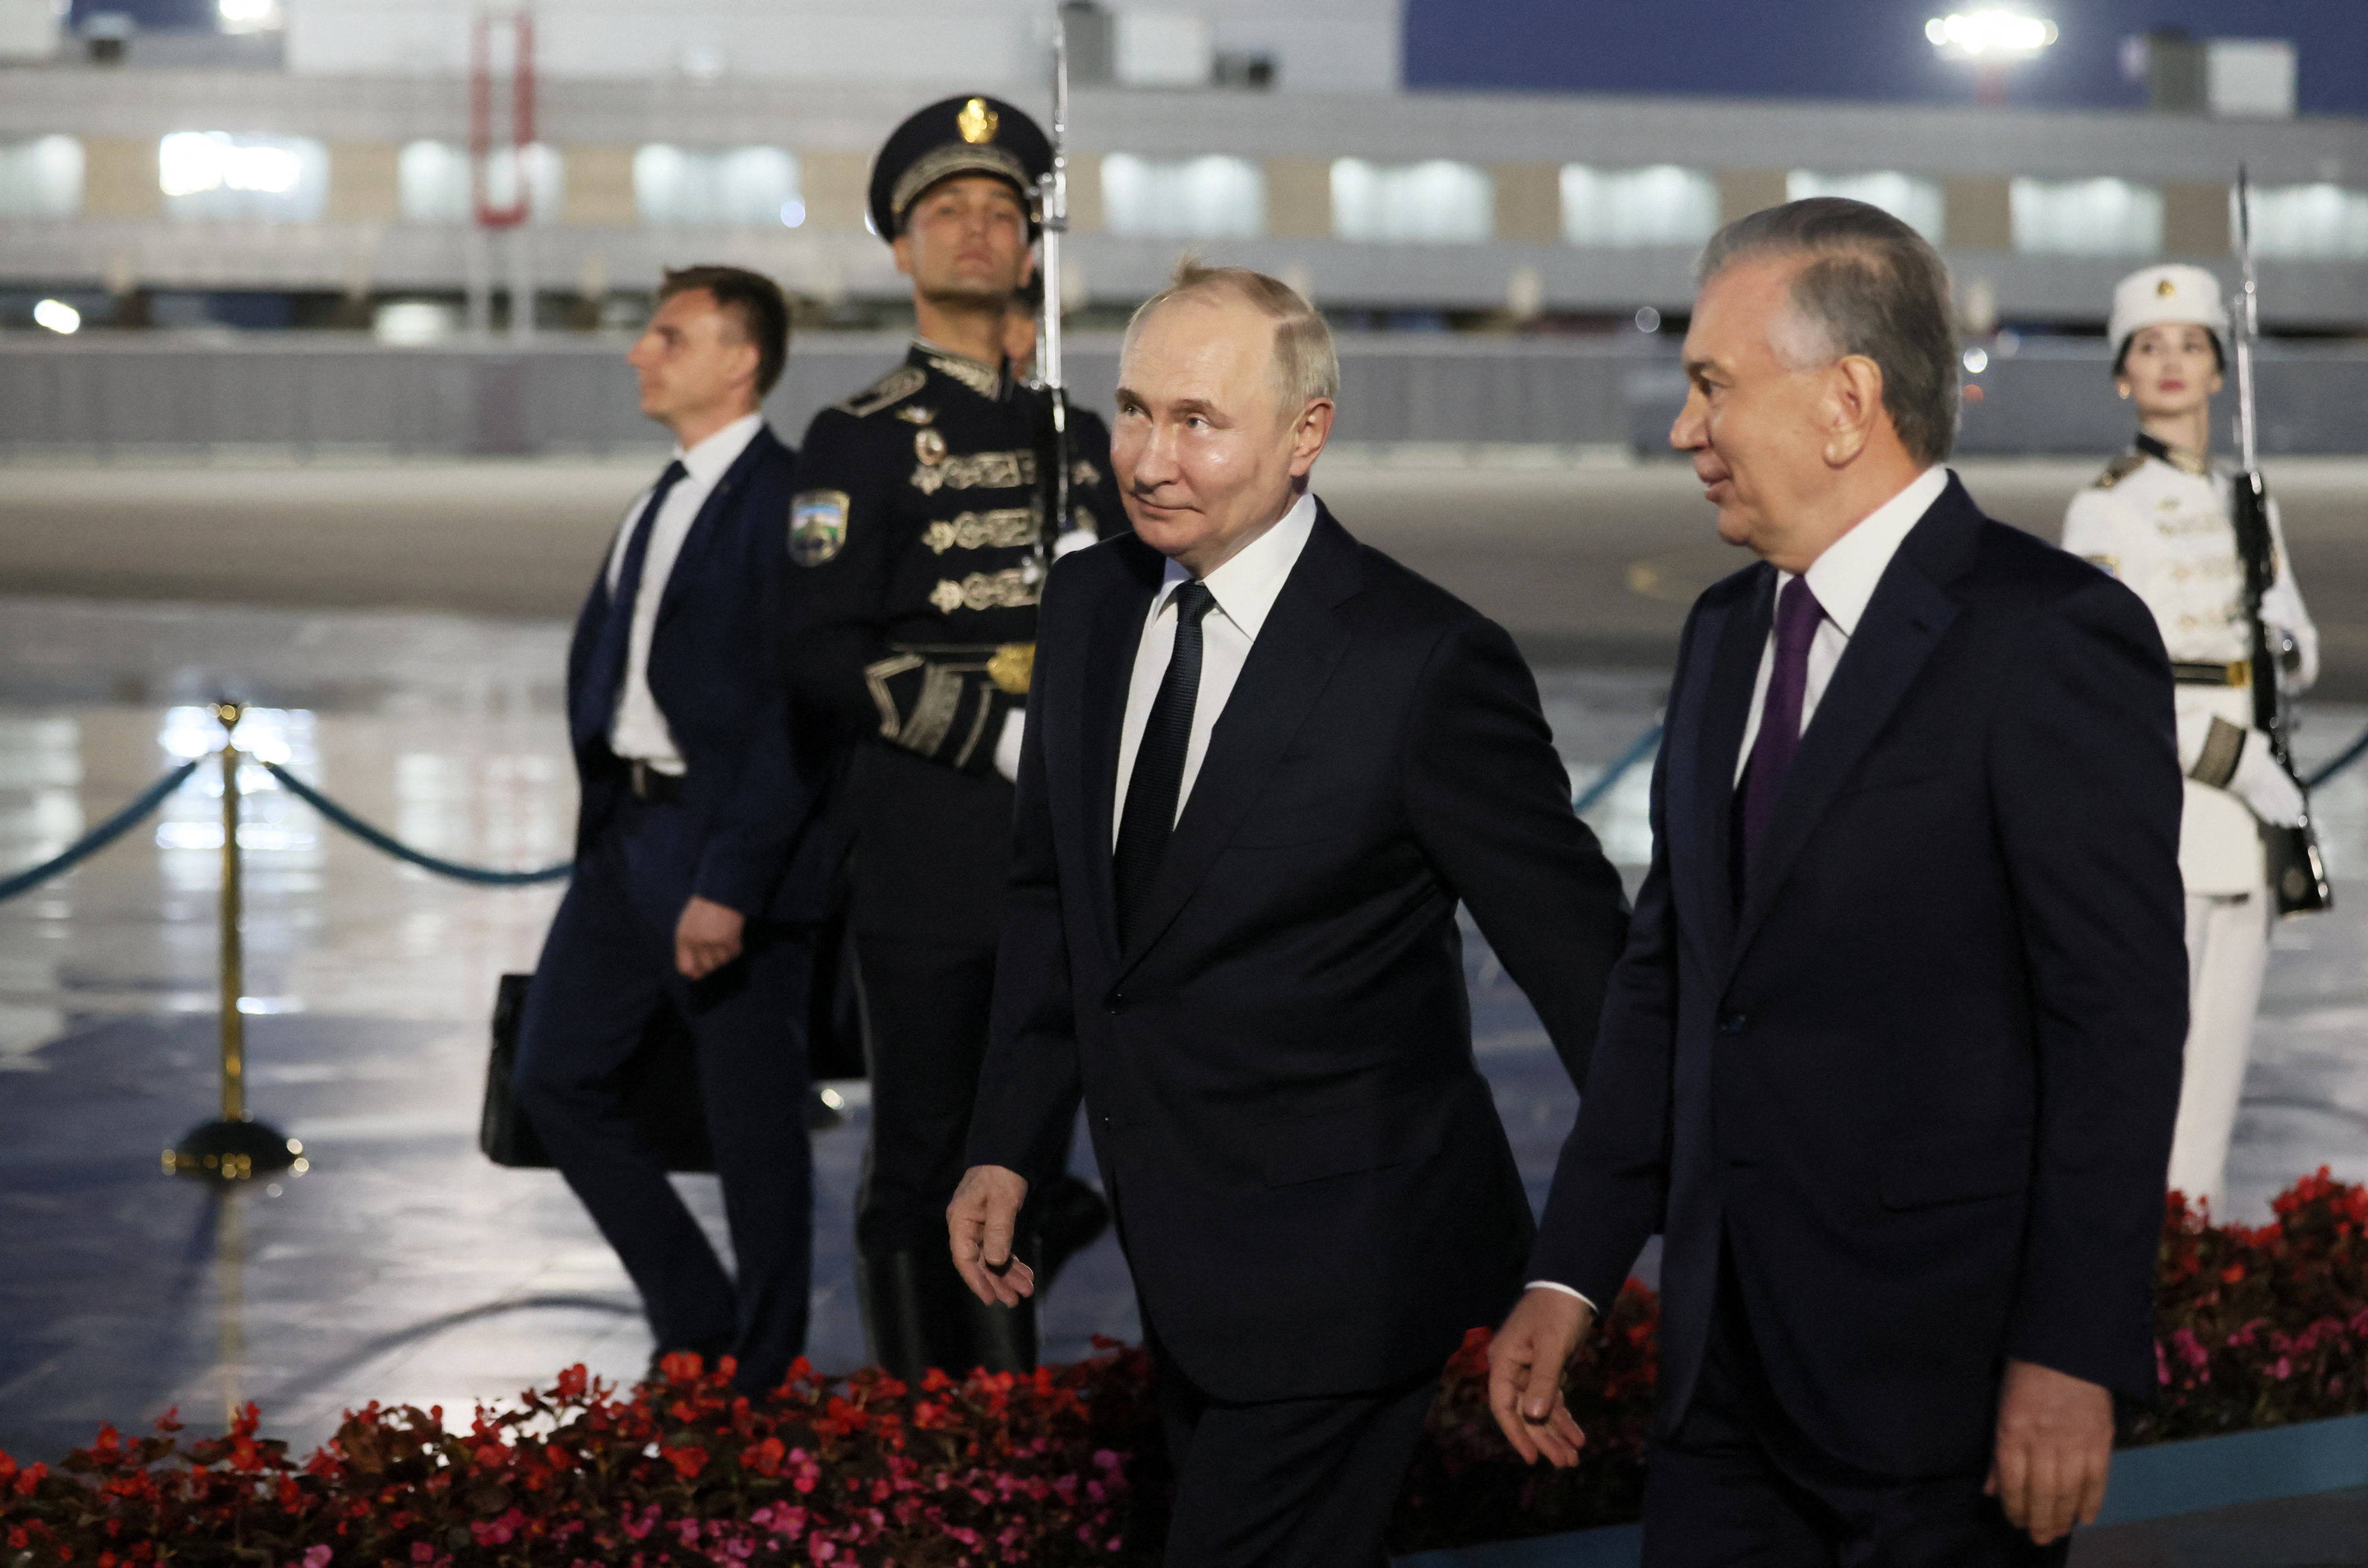 Russian President Vladimir Putin, centre, is welcomed by Uzbek President Shavkat Mirziyoyev at the airport in Tashkent, Uzbekistan on Sunday. Photo: Sputnik / Mikhail Metzel / Pool via Reuters